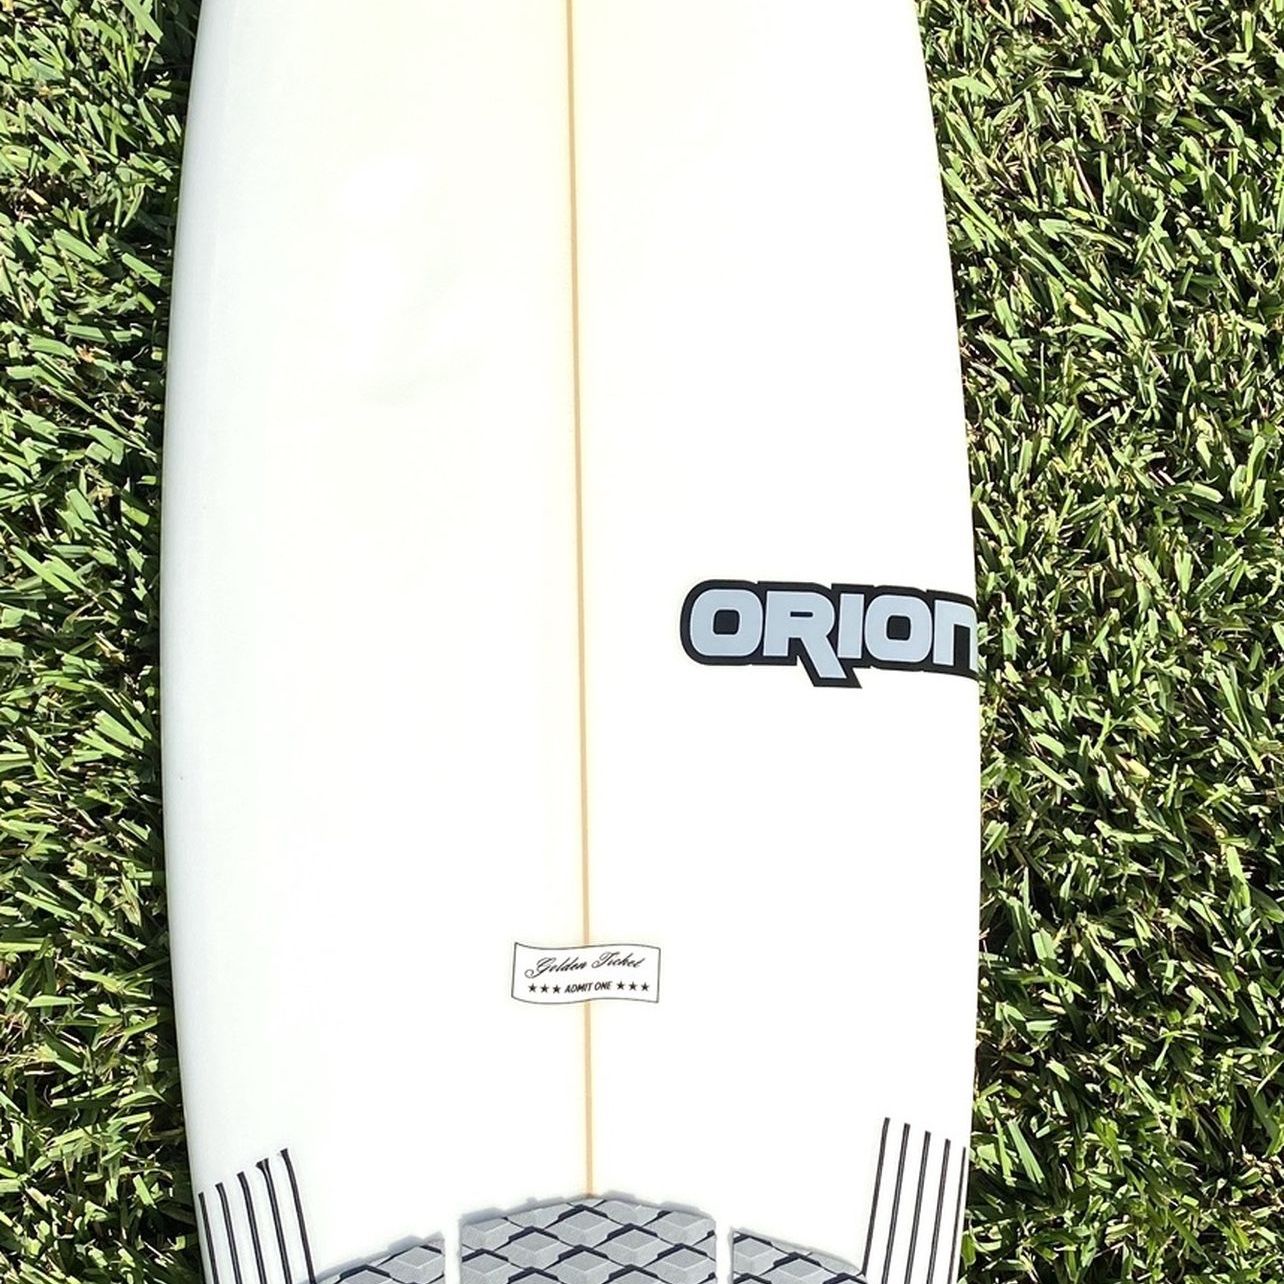 ORION 5’10” Golden Ticket Model Surfboard 